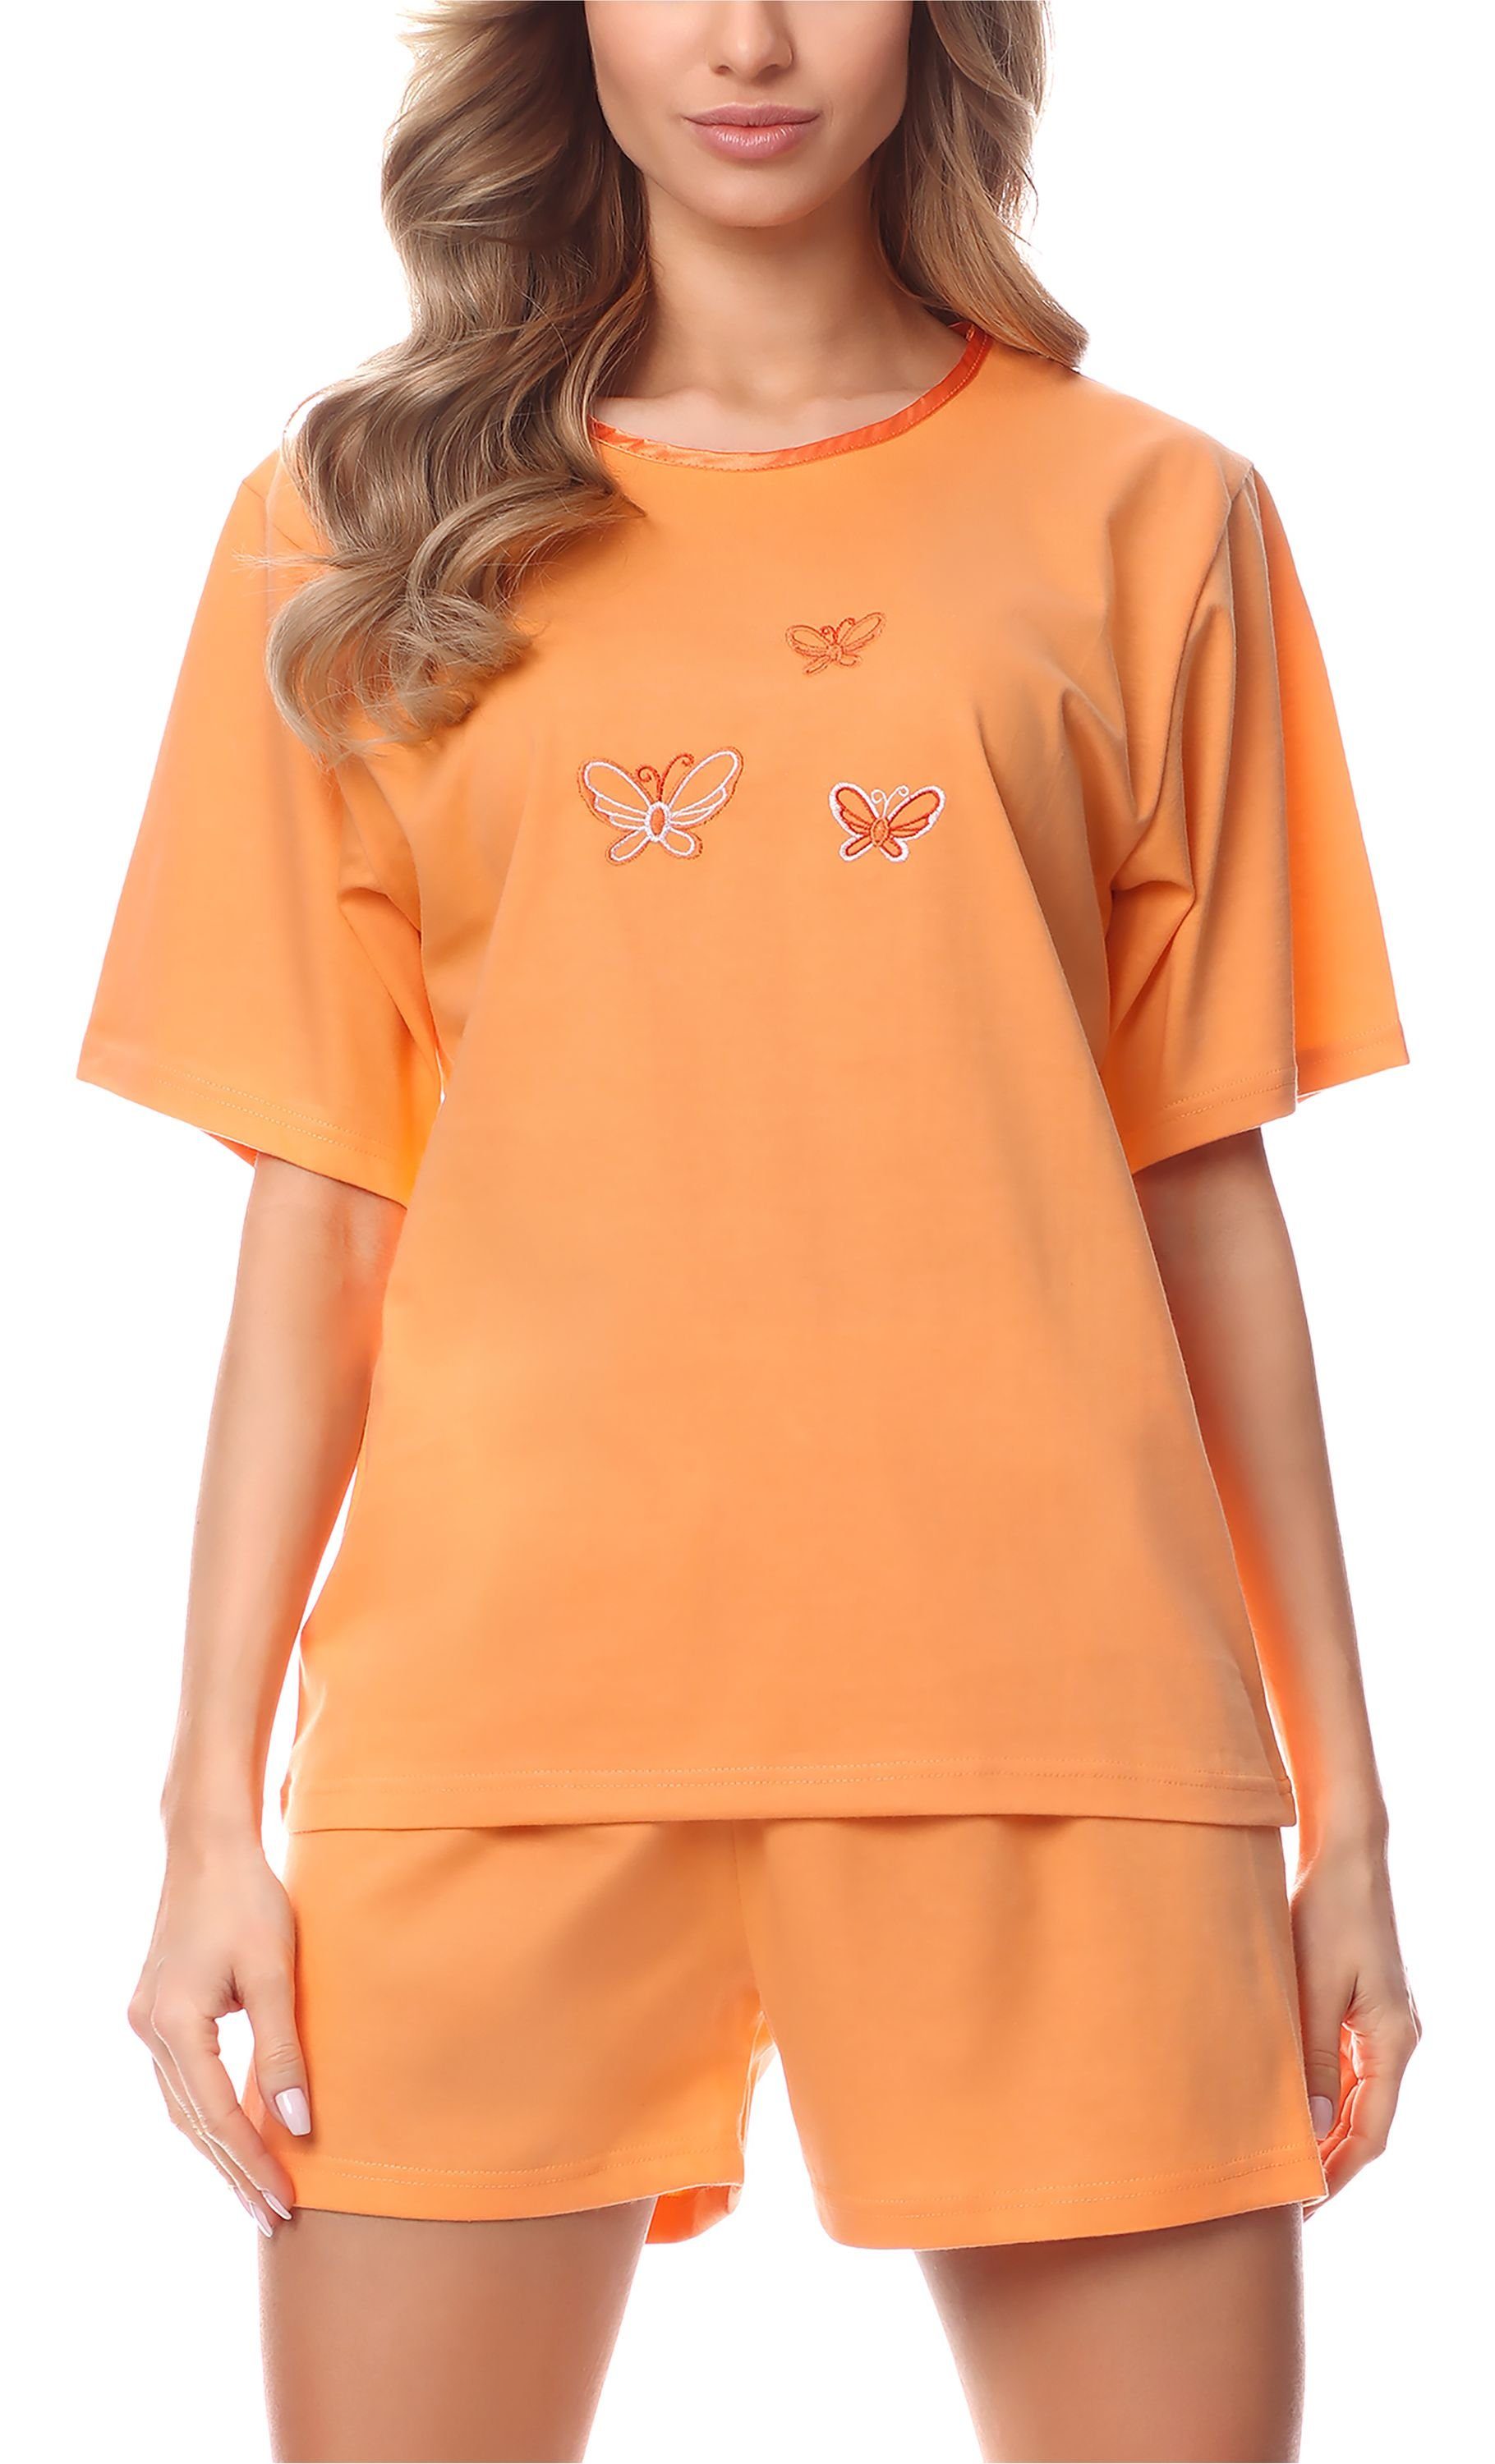 Merry Style Schlafanzug Damen Kurzarm Schlafanzug 91LW1 Orange (Kurzarm)